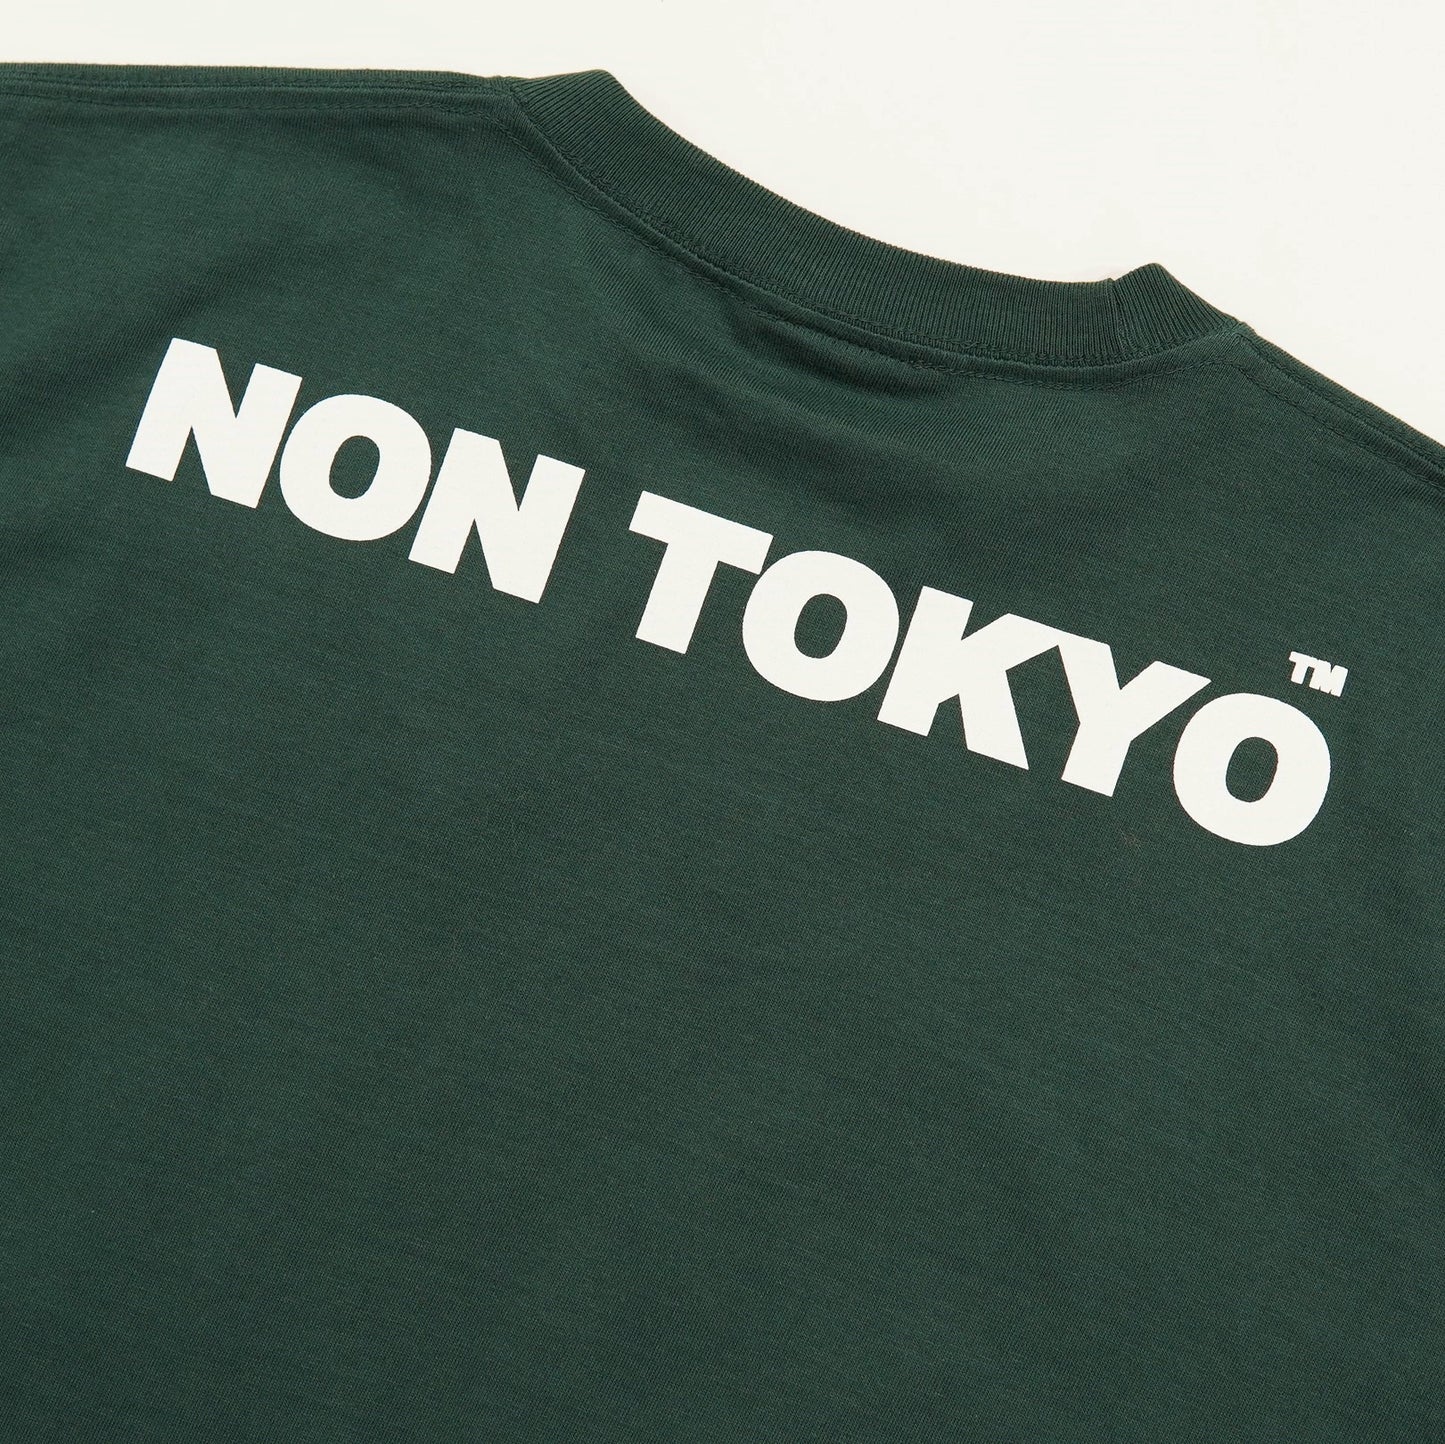 NON TOKYO / PRINT T-SHIRT(princess knight.D / GREEN) / 〈ノントーキョー〉プリントTシャツ (リボンの騎士D / グリーン)